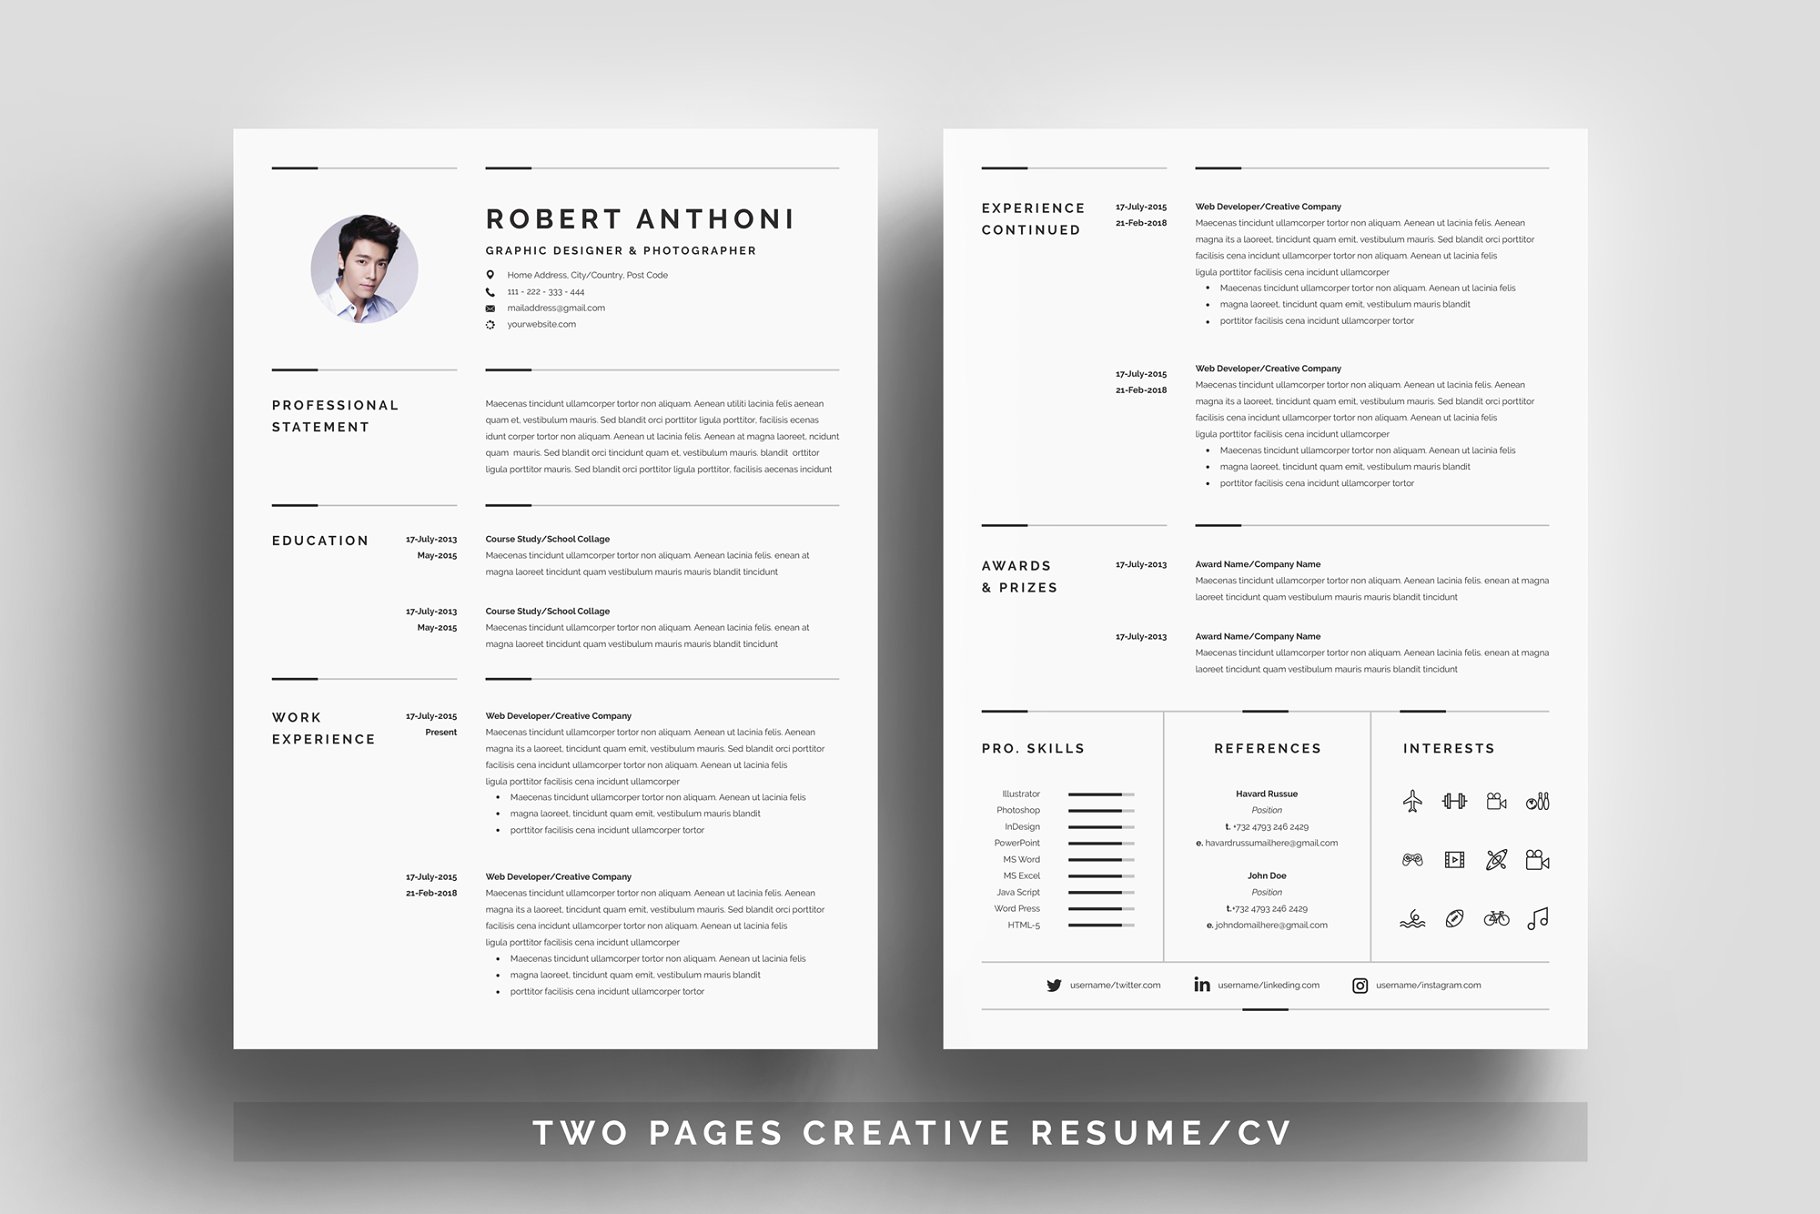 创意个人求职简历模板 Creative Resume Template 3 Pages插图(2)